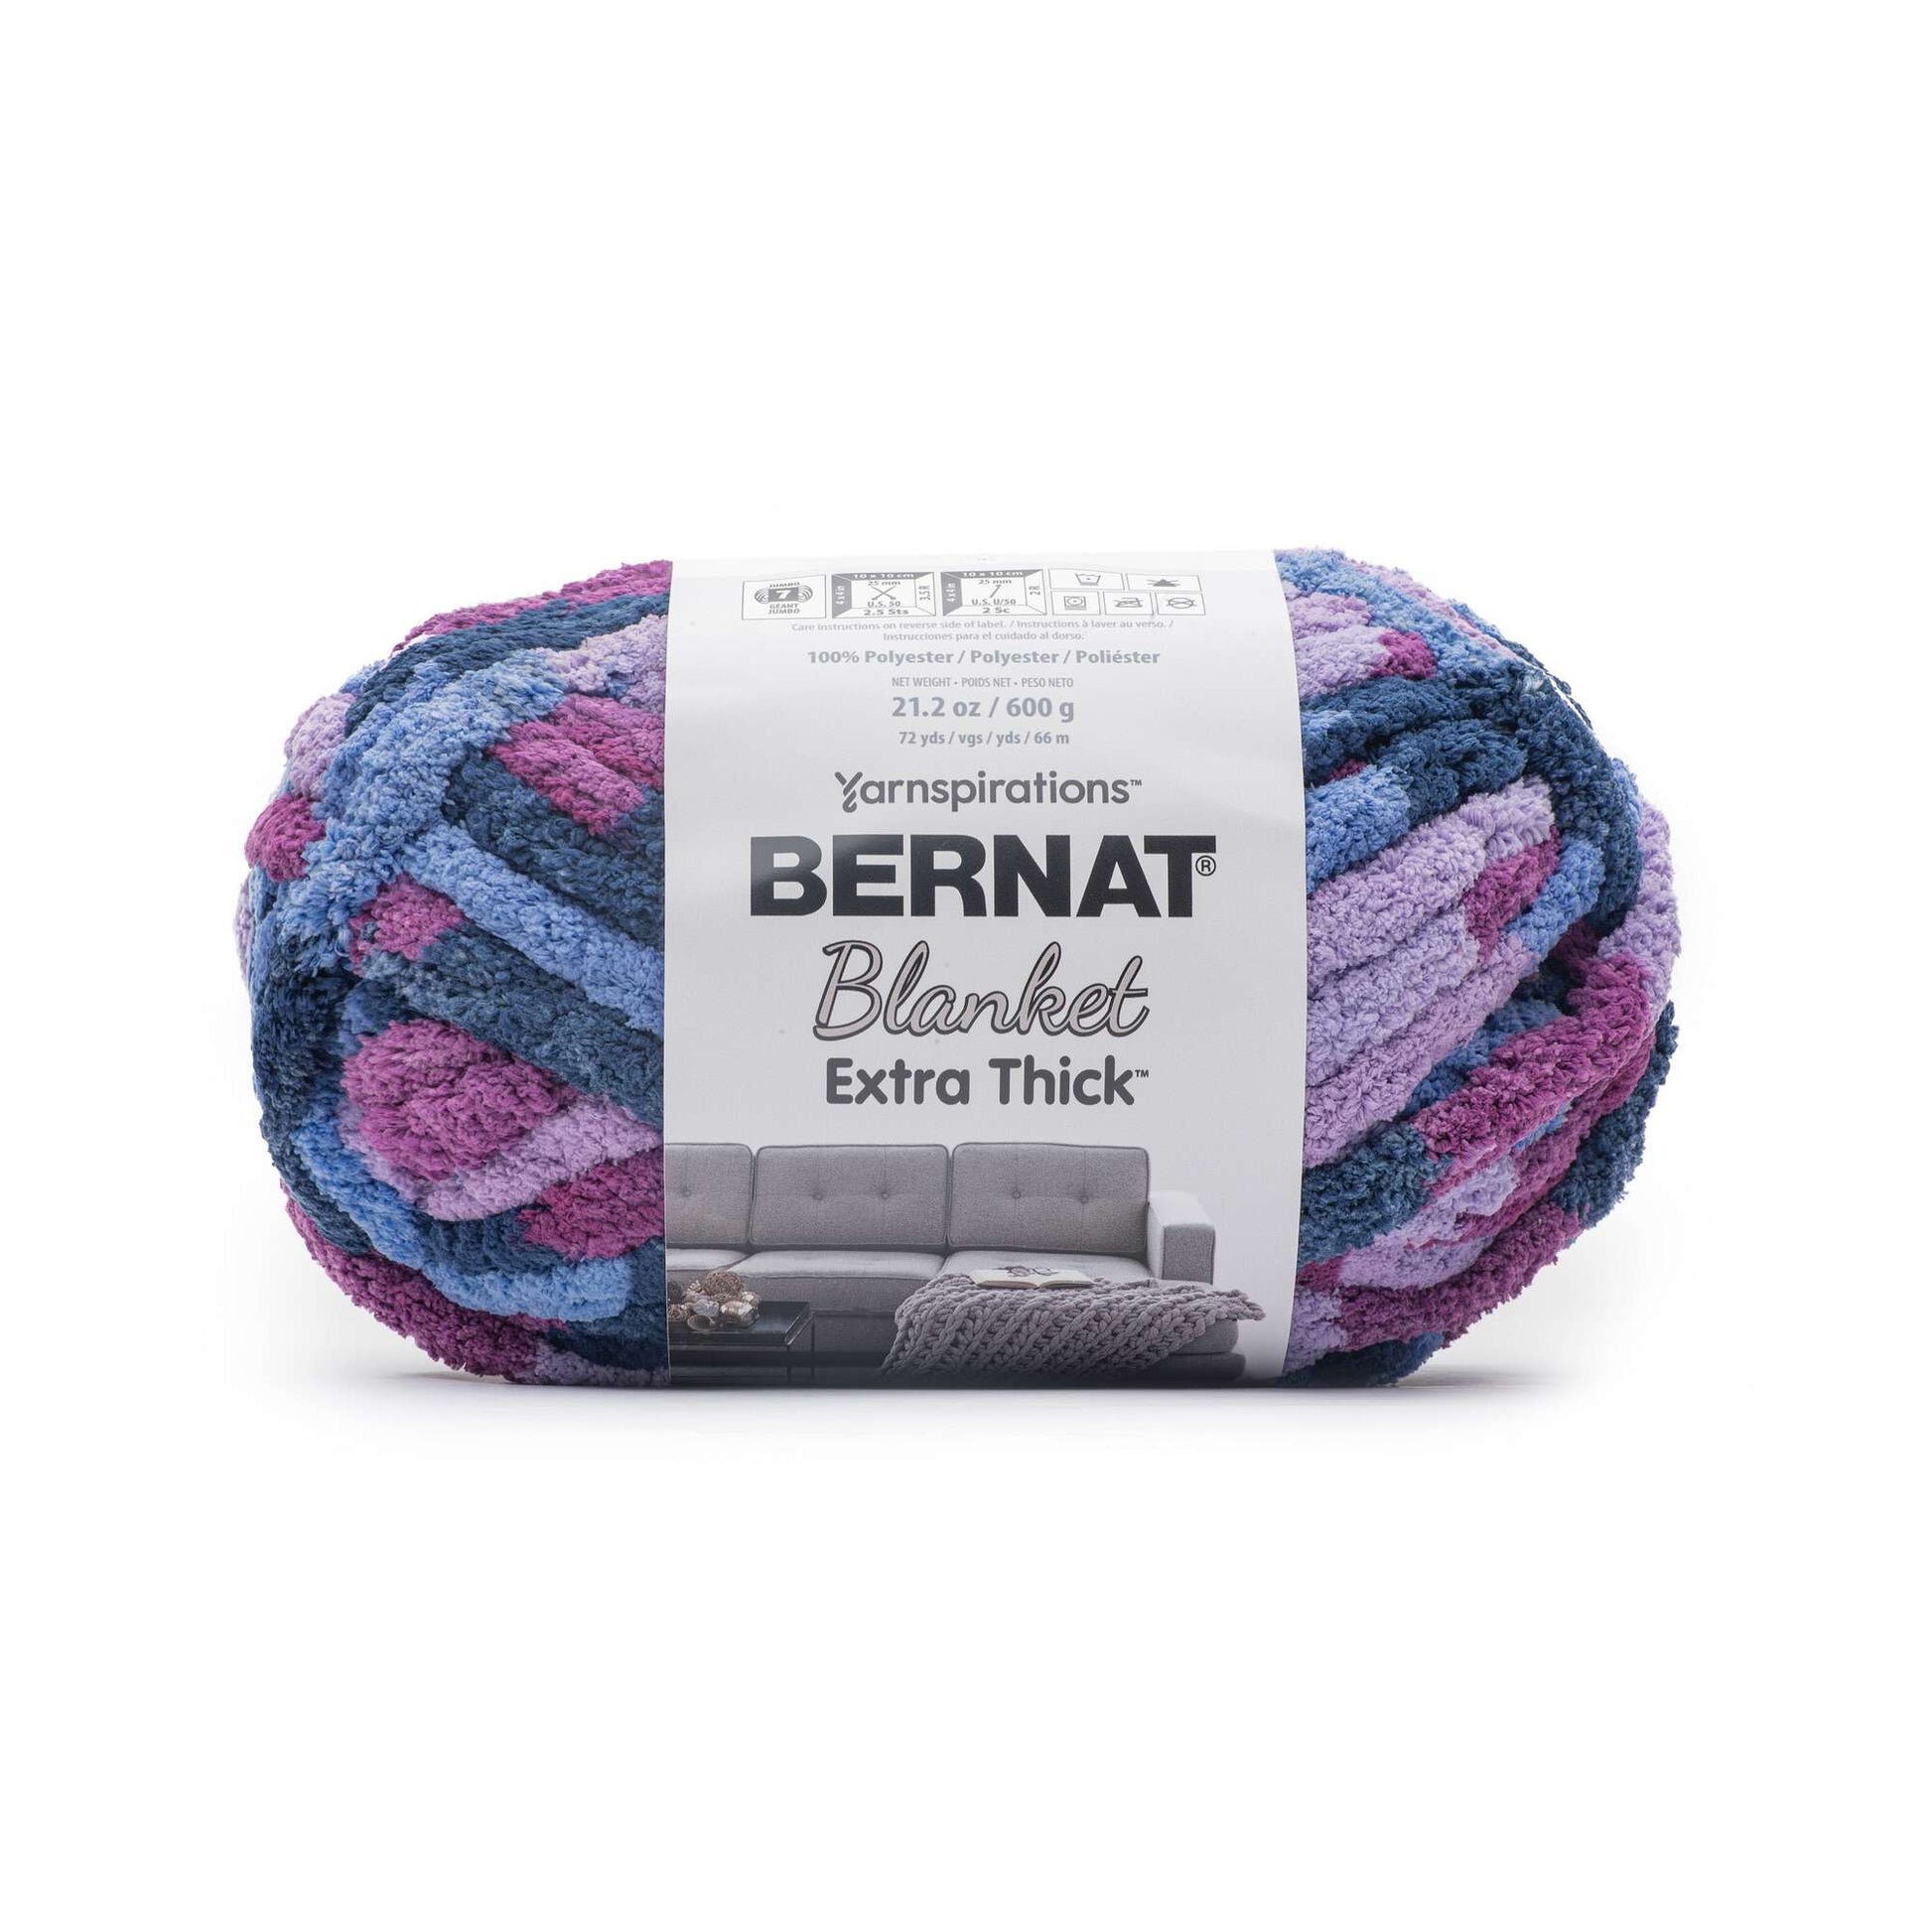 Bernat Blanket Extra Thick Yarn (600g/21.2oz) - Discontinued Shades Purple Rain